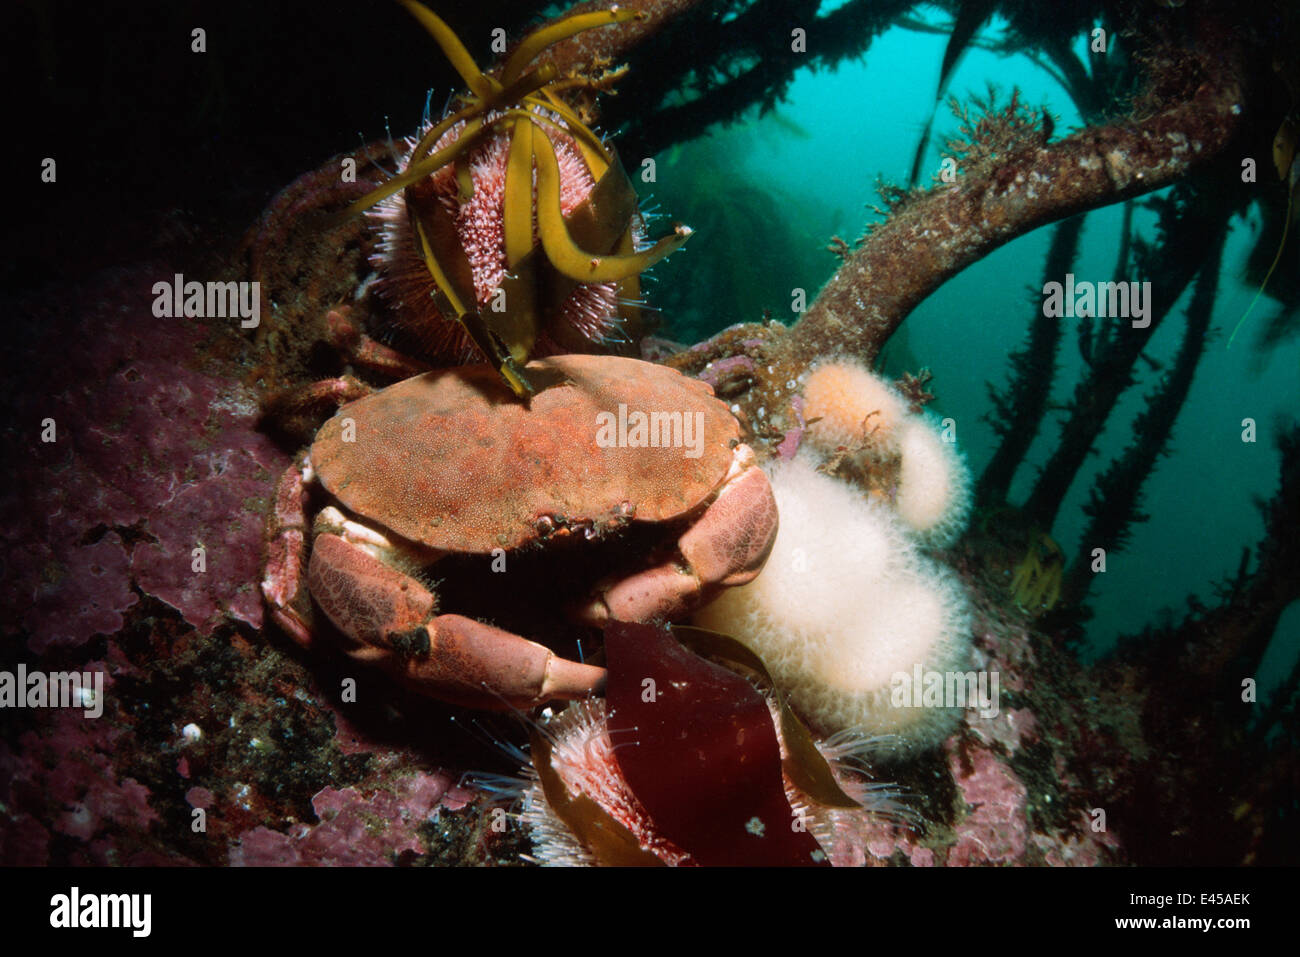 Edible crab (Cancer pagurus) in kelp, St. Abbs,  North Sea, Atlantic Ocean. Stock Photo